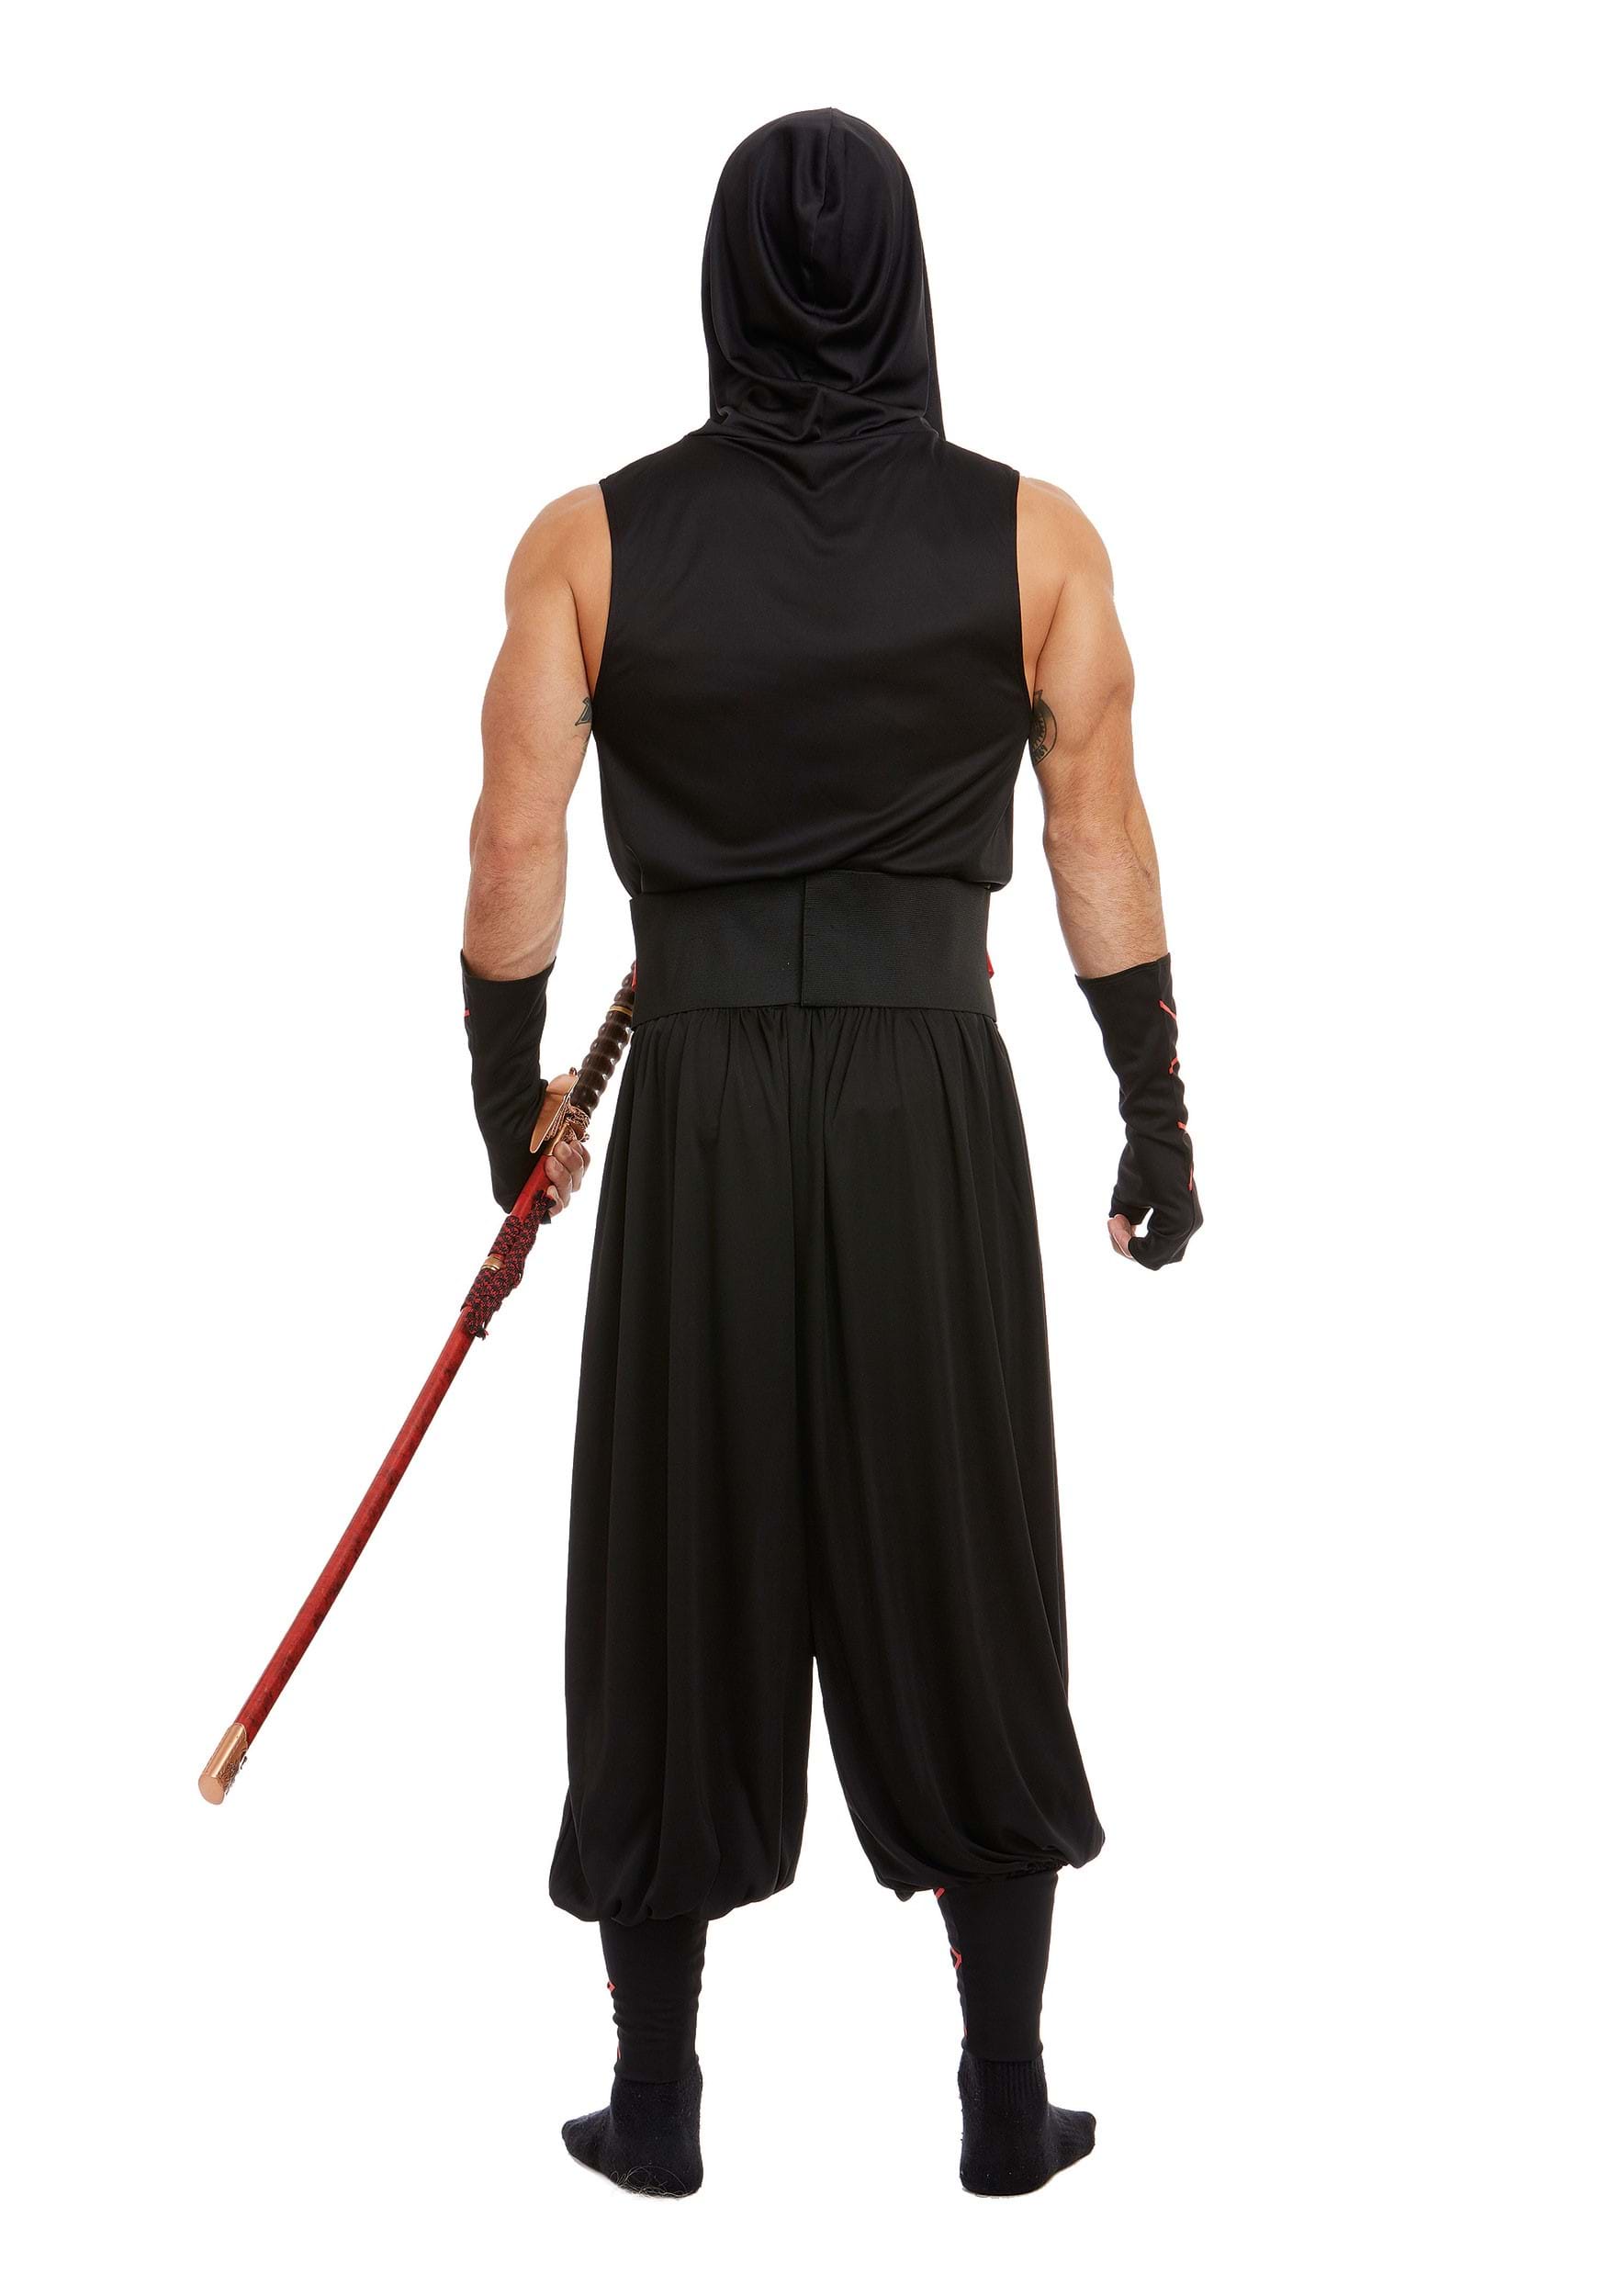 https://images.halloween.com/products/91504/2-1-283823/mens-plus-size-sexy-ninja-costume-alt-1.jpg